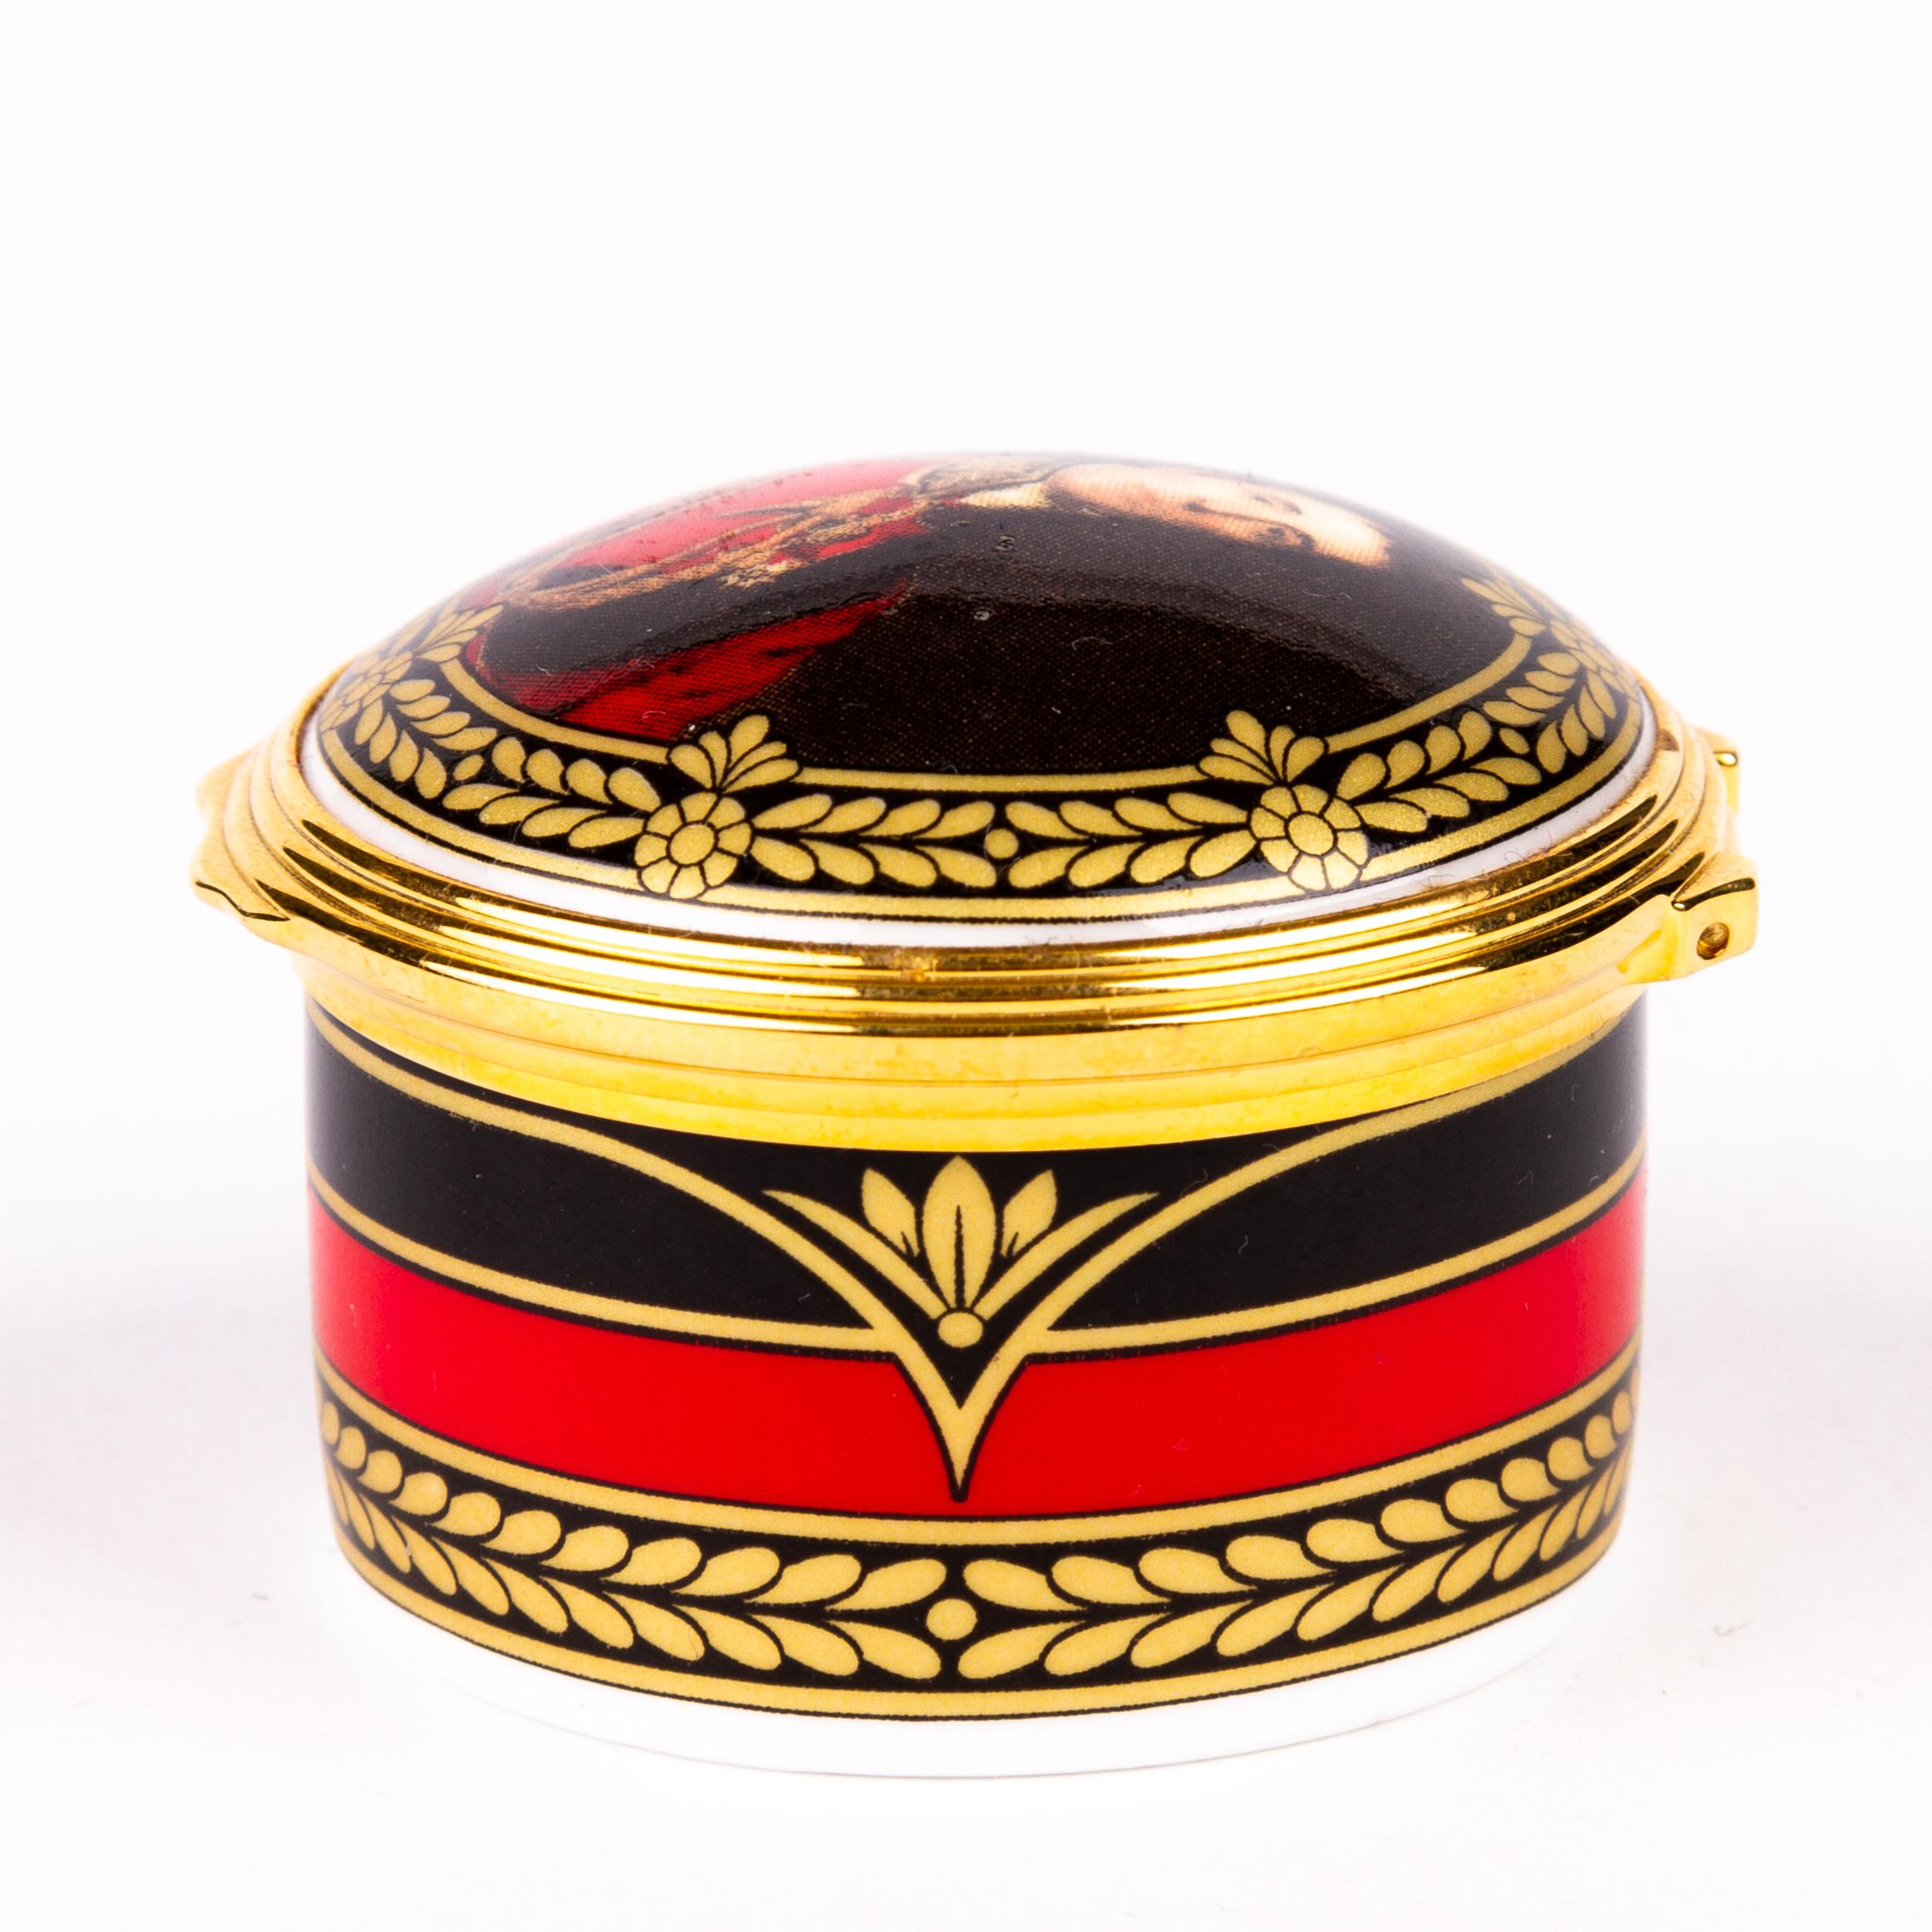 William Edwards Waterloo 24KT Gold Porcelain Pillbox   For Sale 1